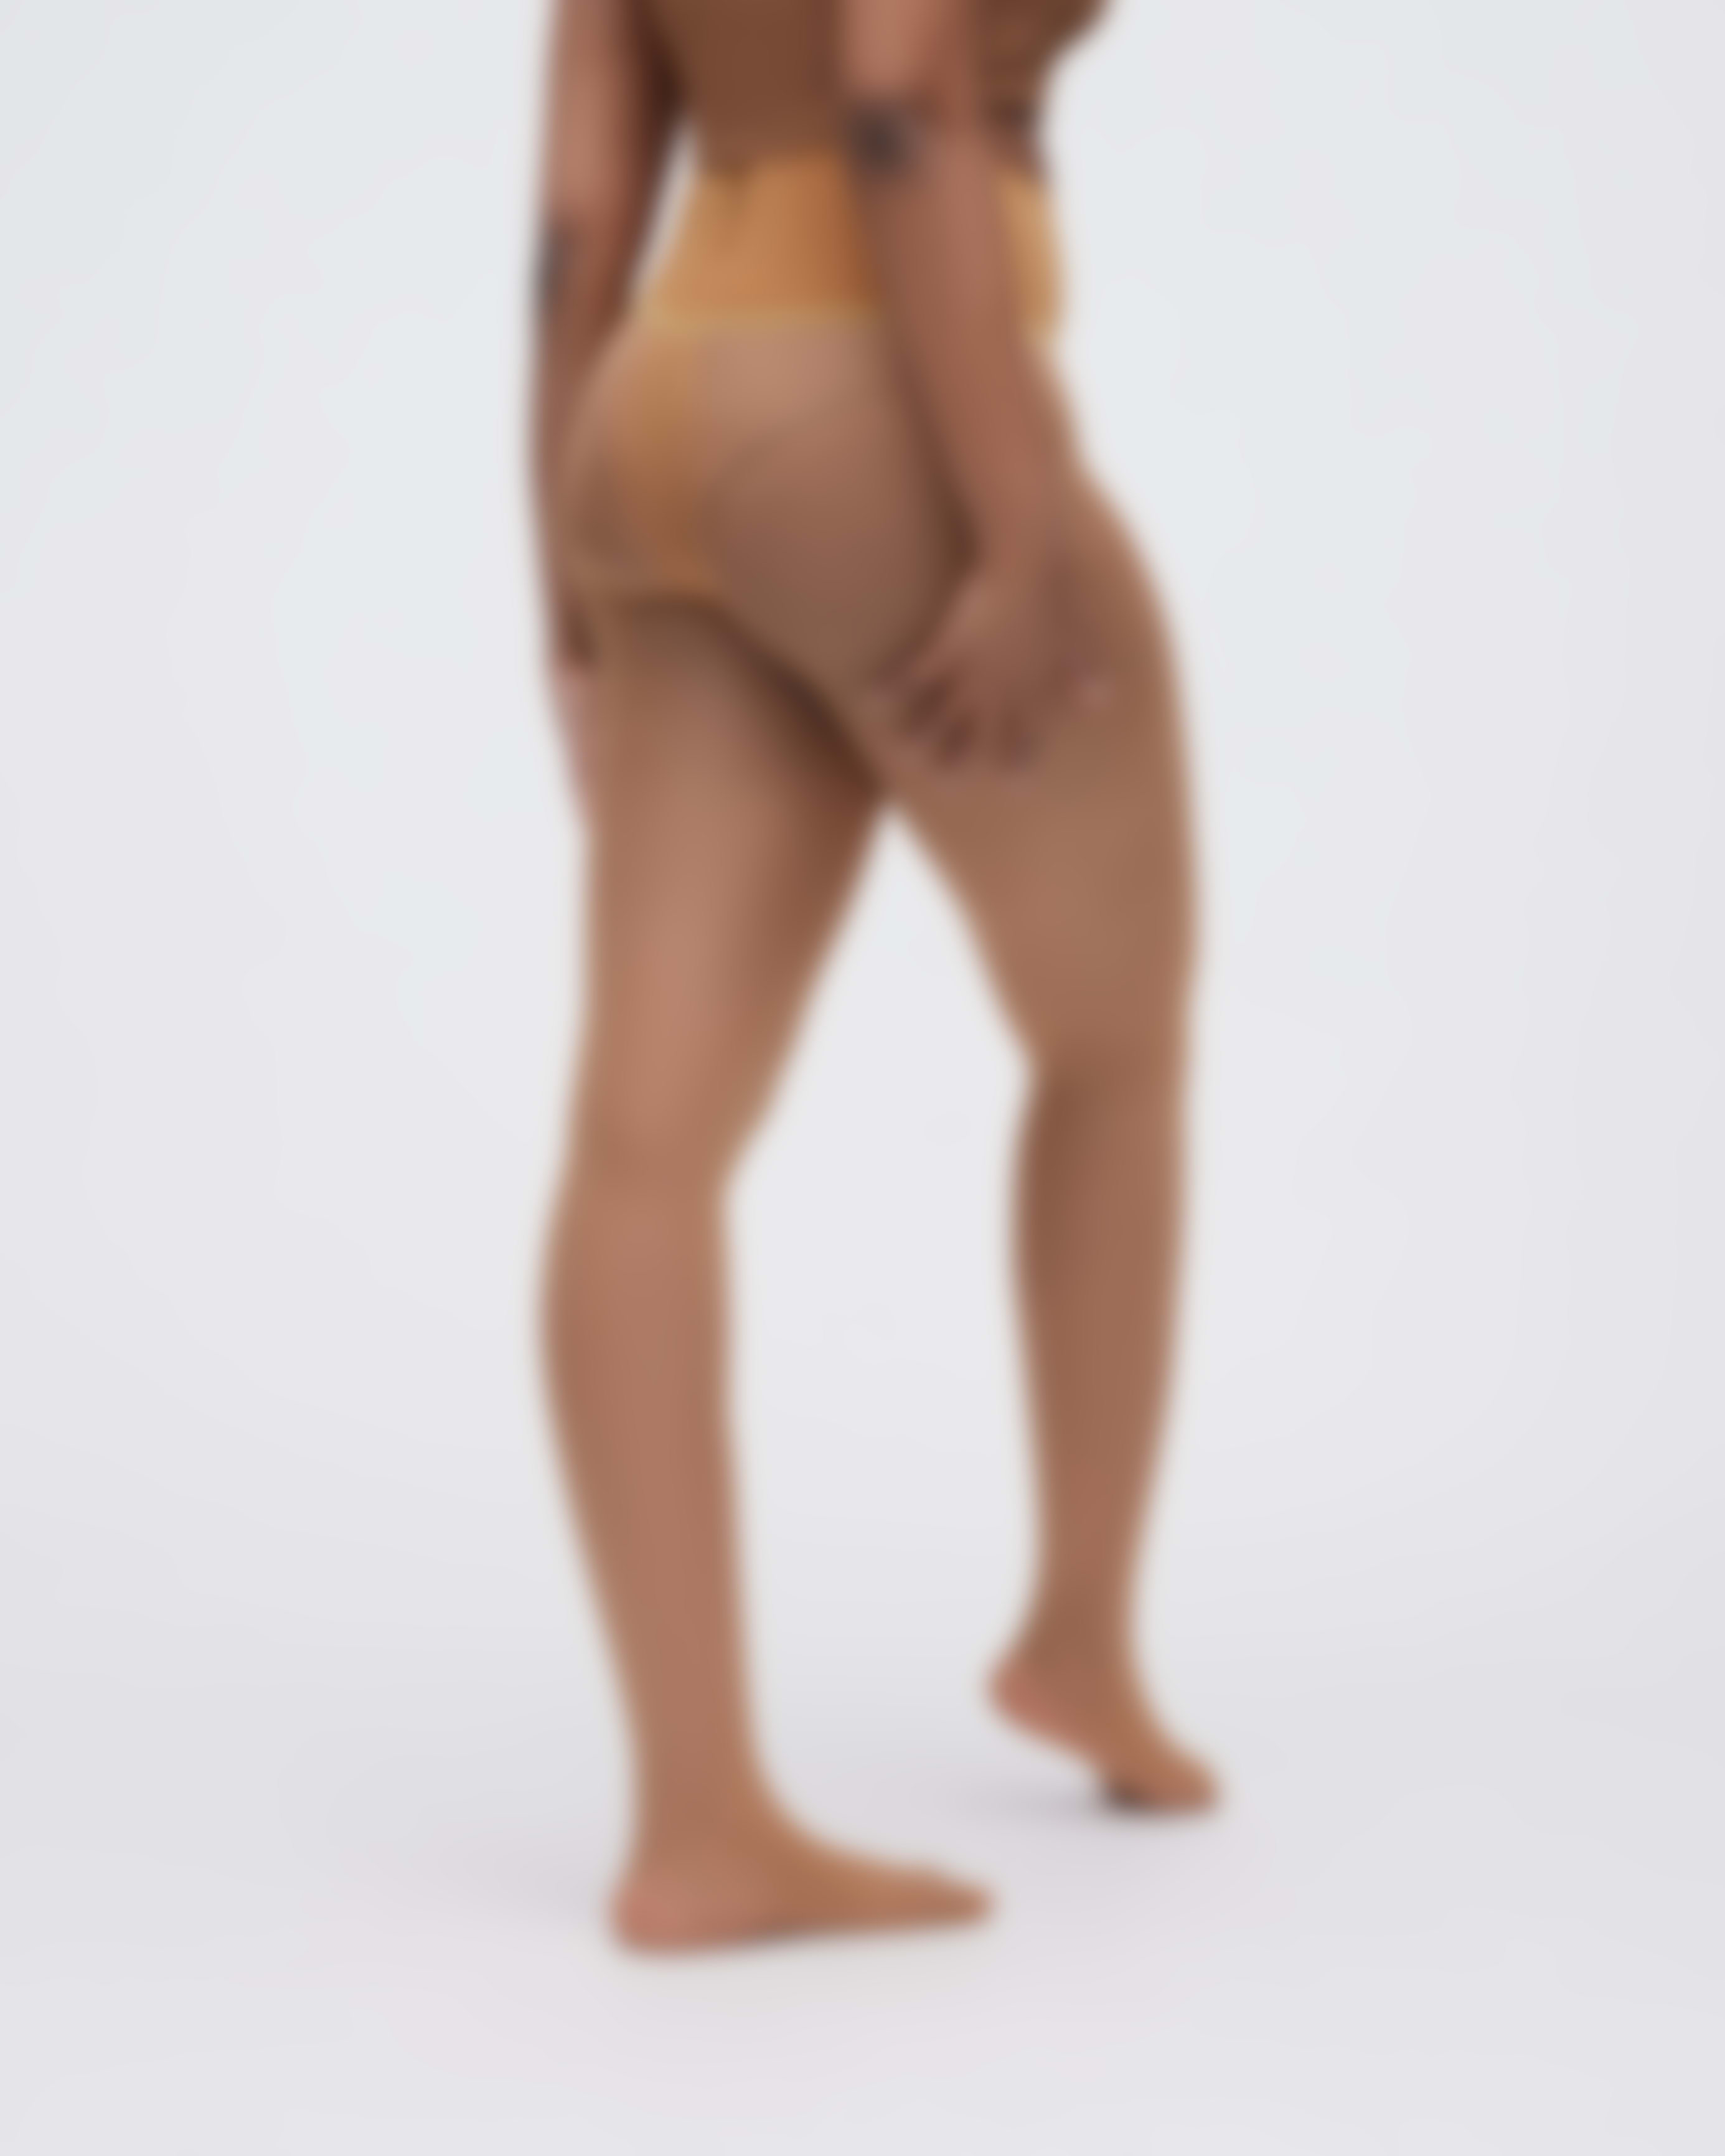 null, Nude Super Sheer Rip-Resist Tights, nude-supersheer-tights, sheertex, product image, unbreakable tights, model